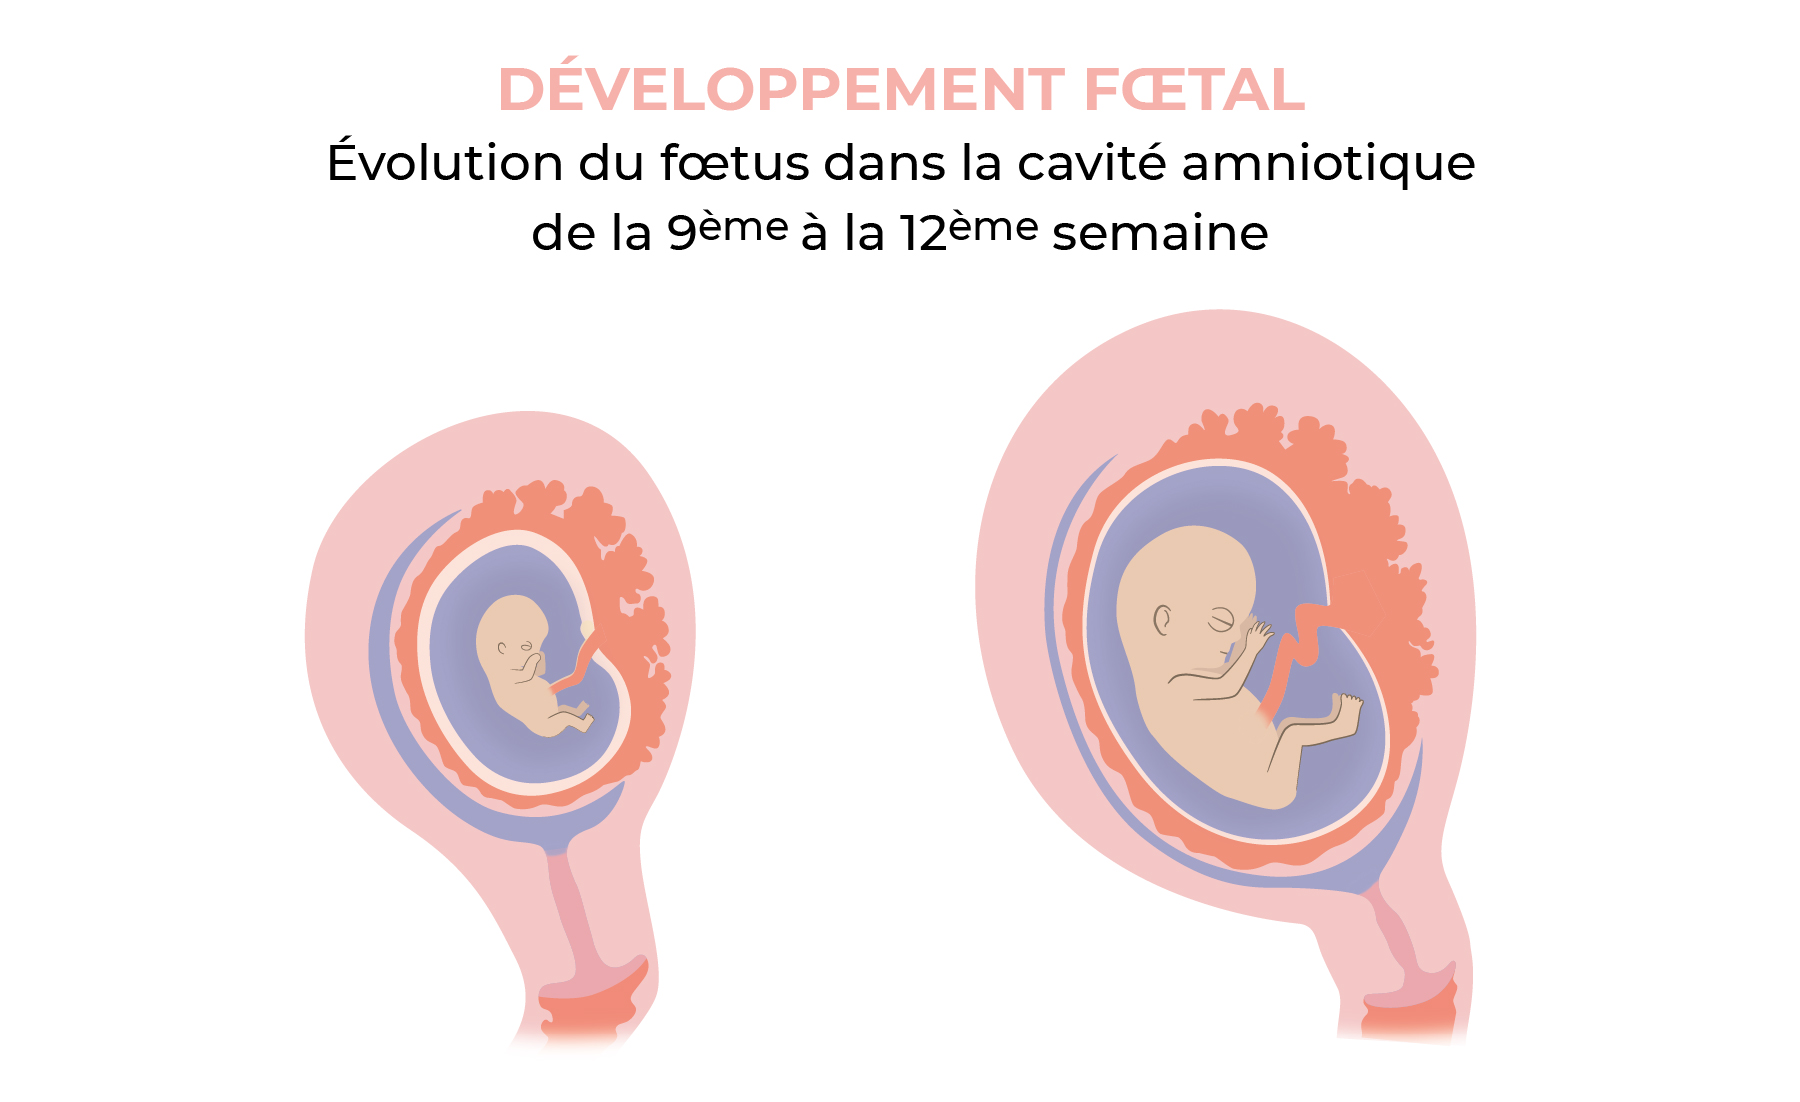 Evolution du foetus